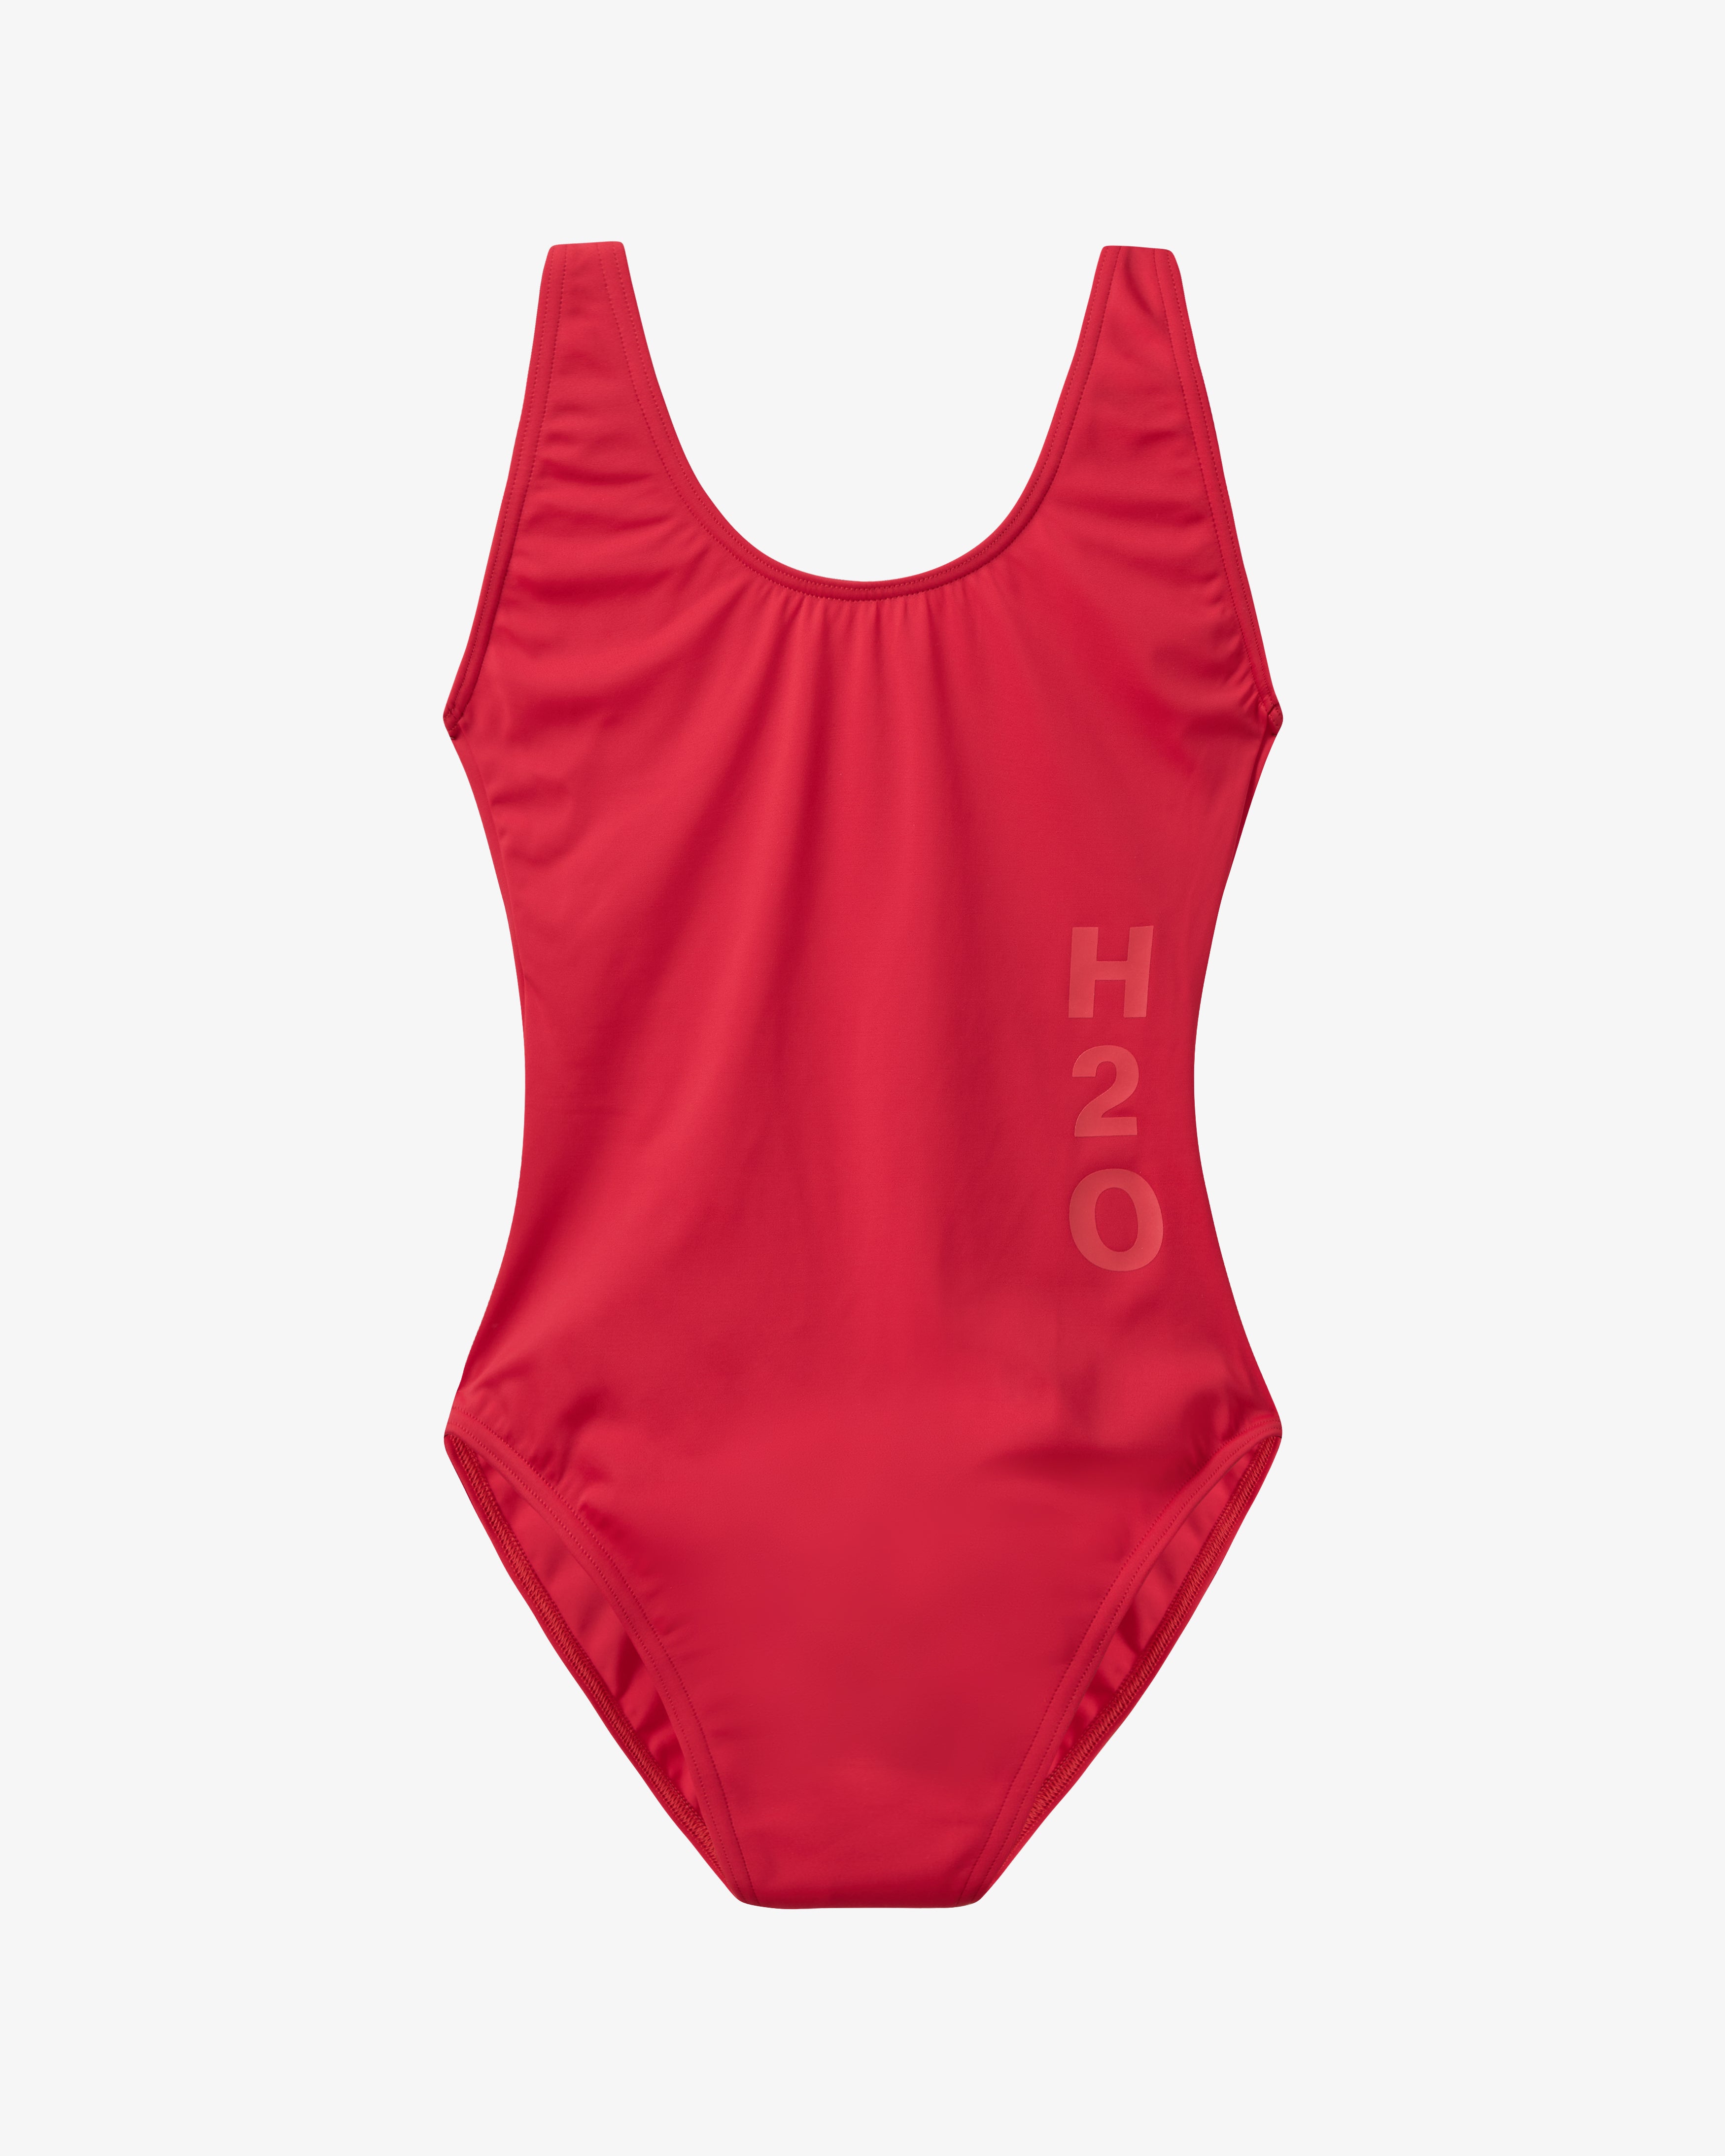 Tornø Logo Swim Suit- Red